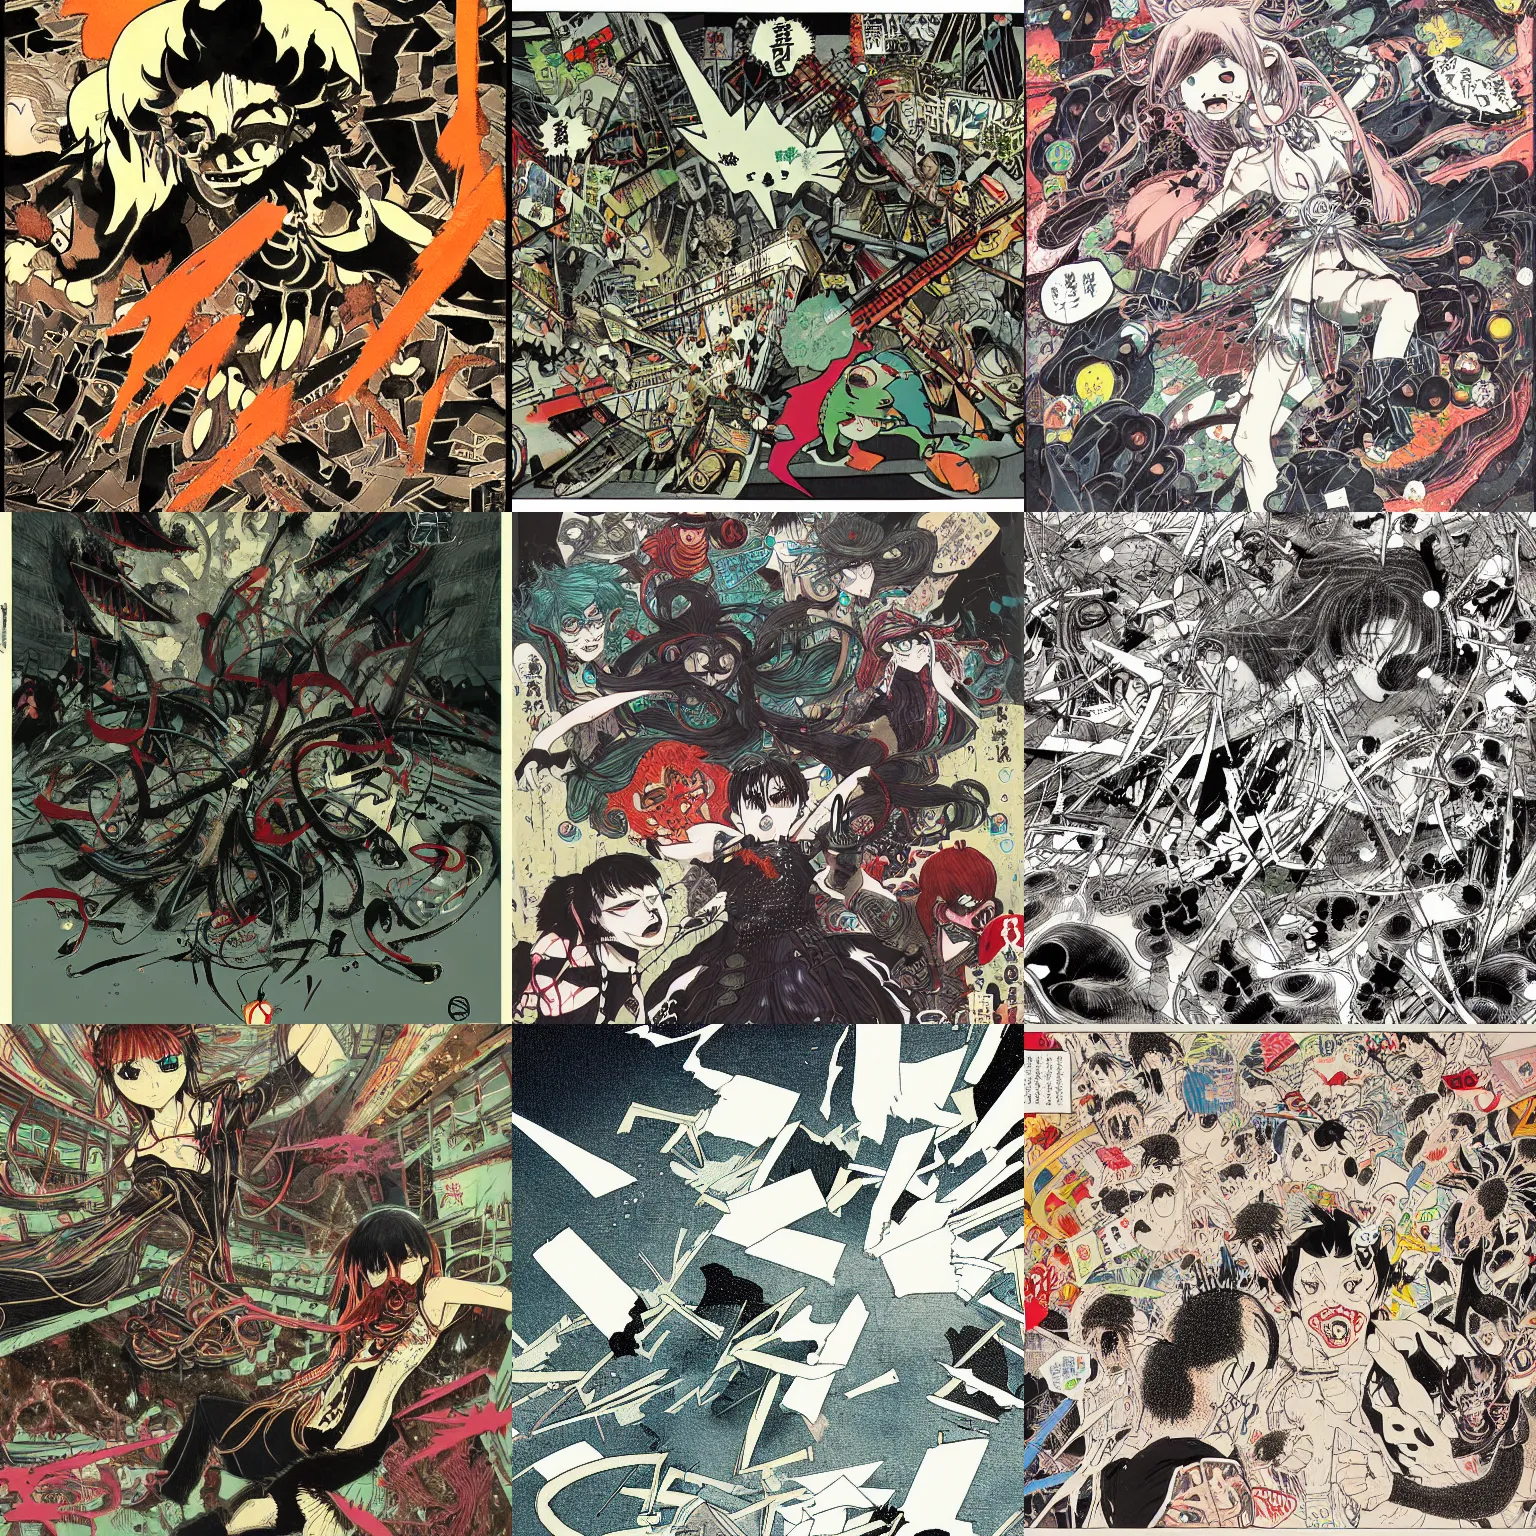 Prompt: chaos by suehiro maruo,